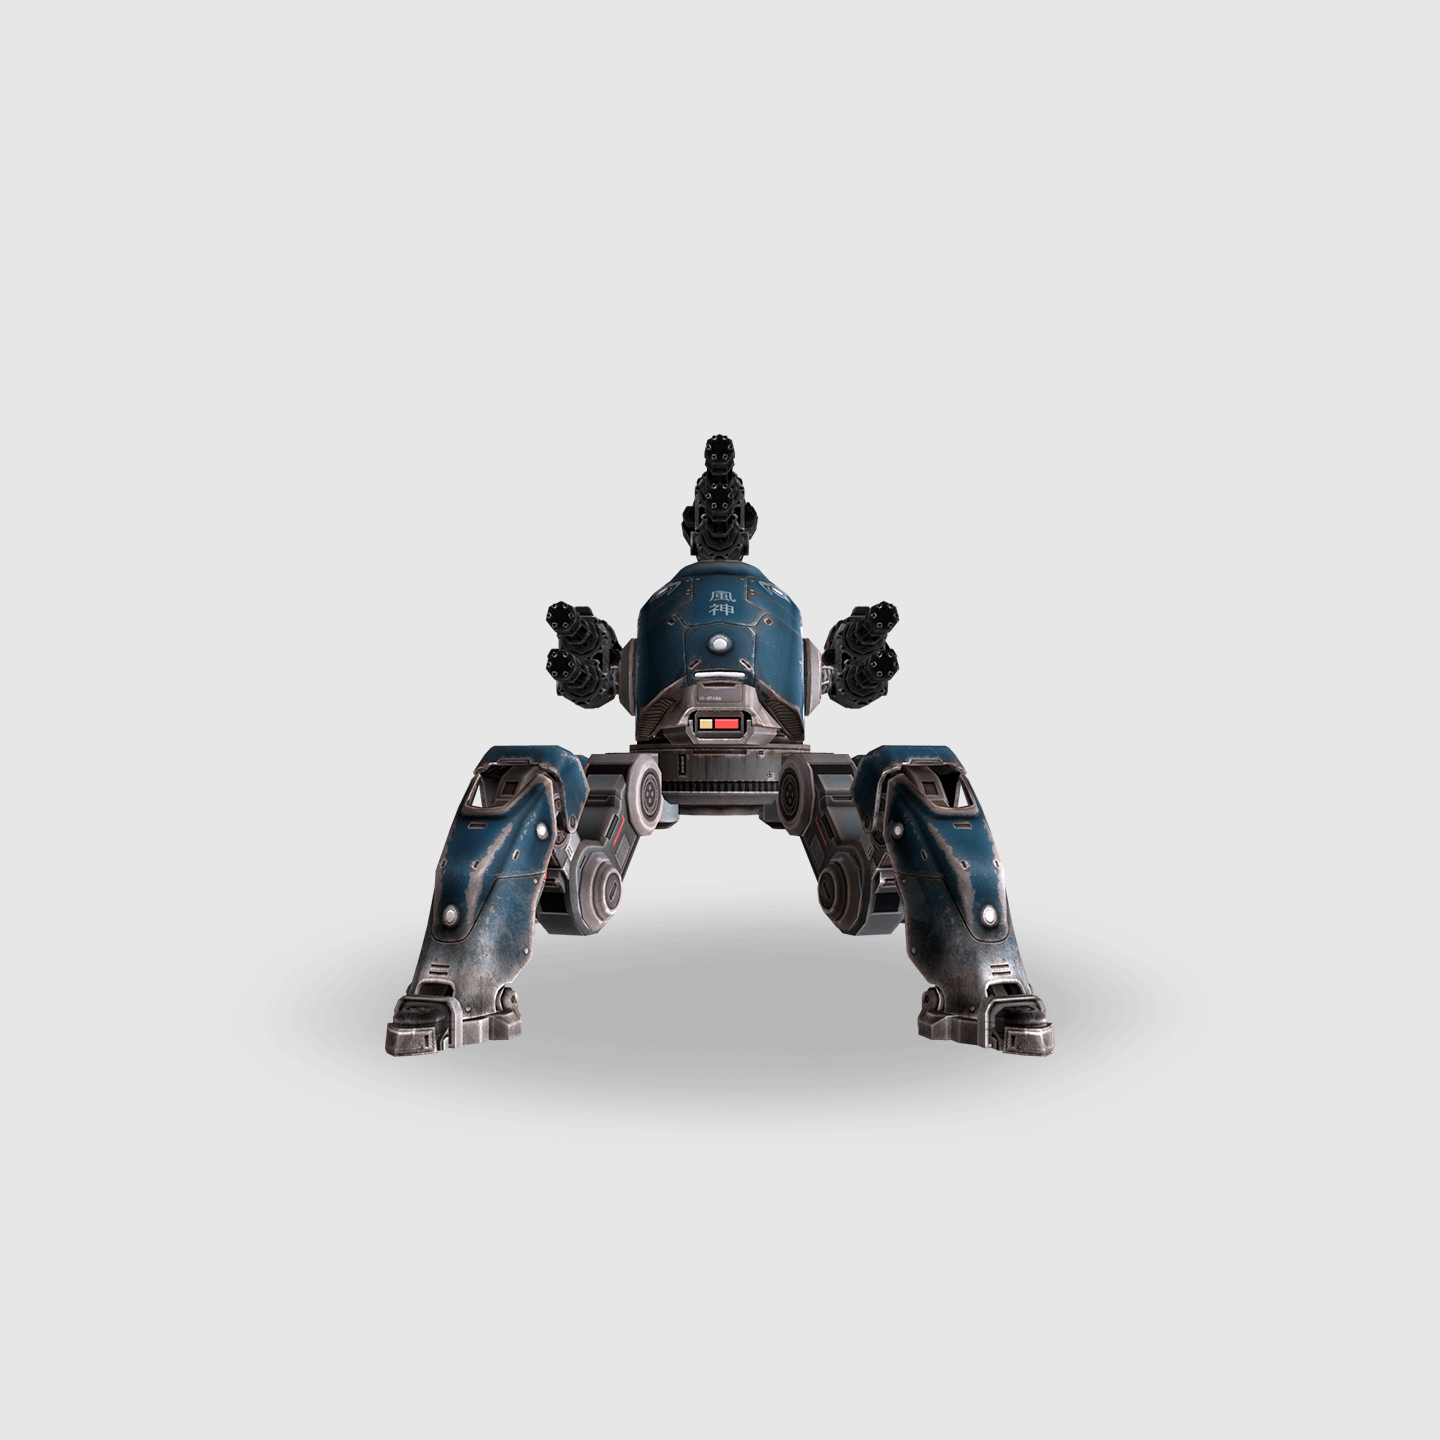 war robot toys for sale